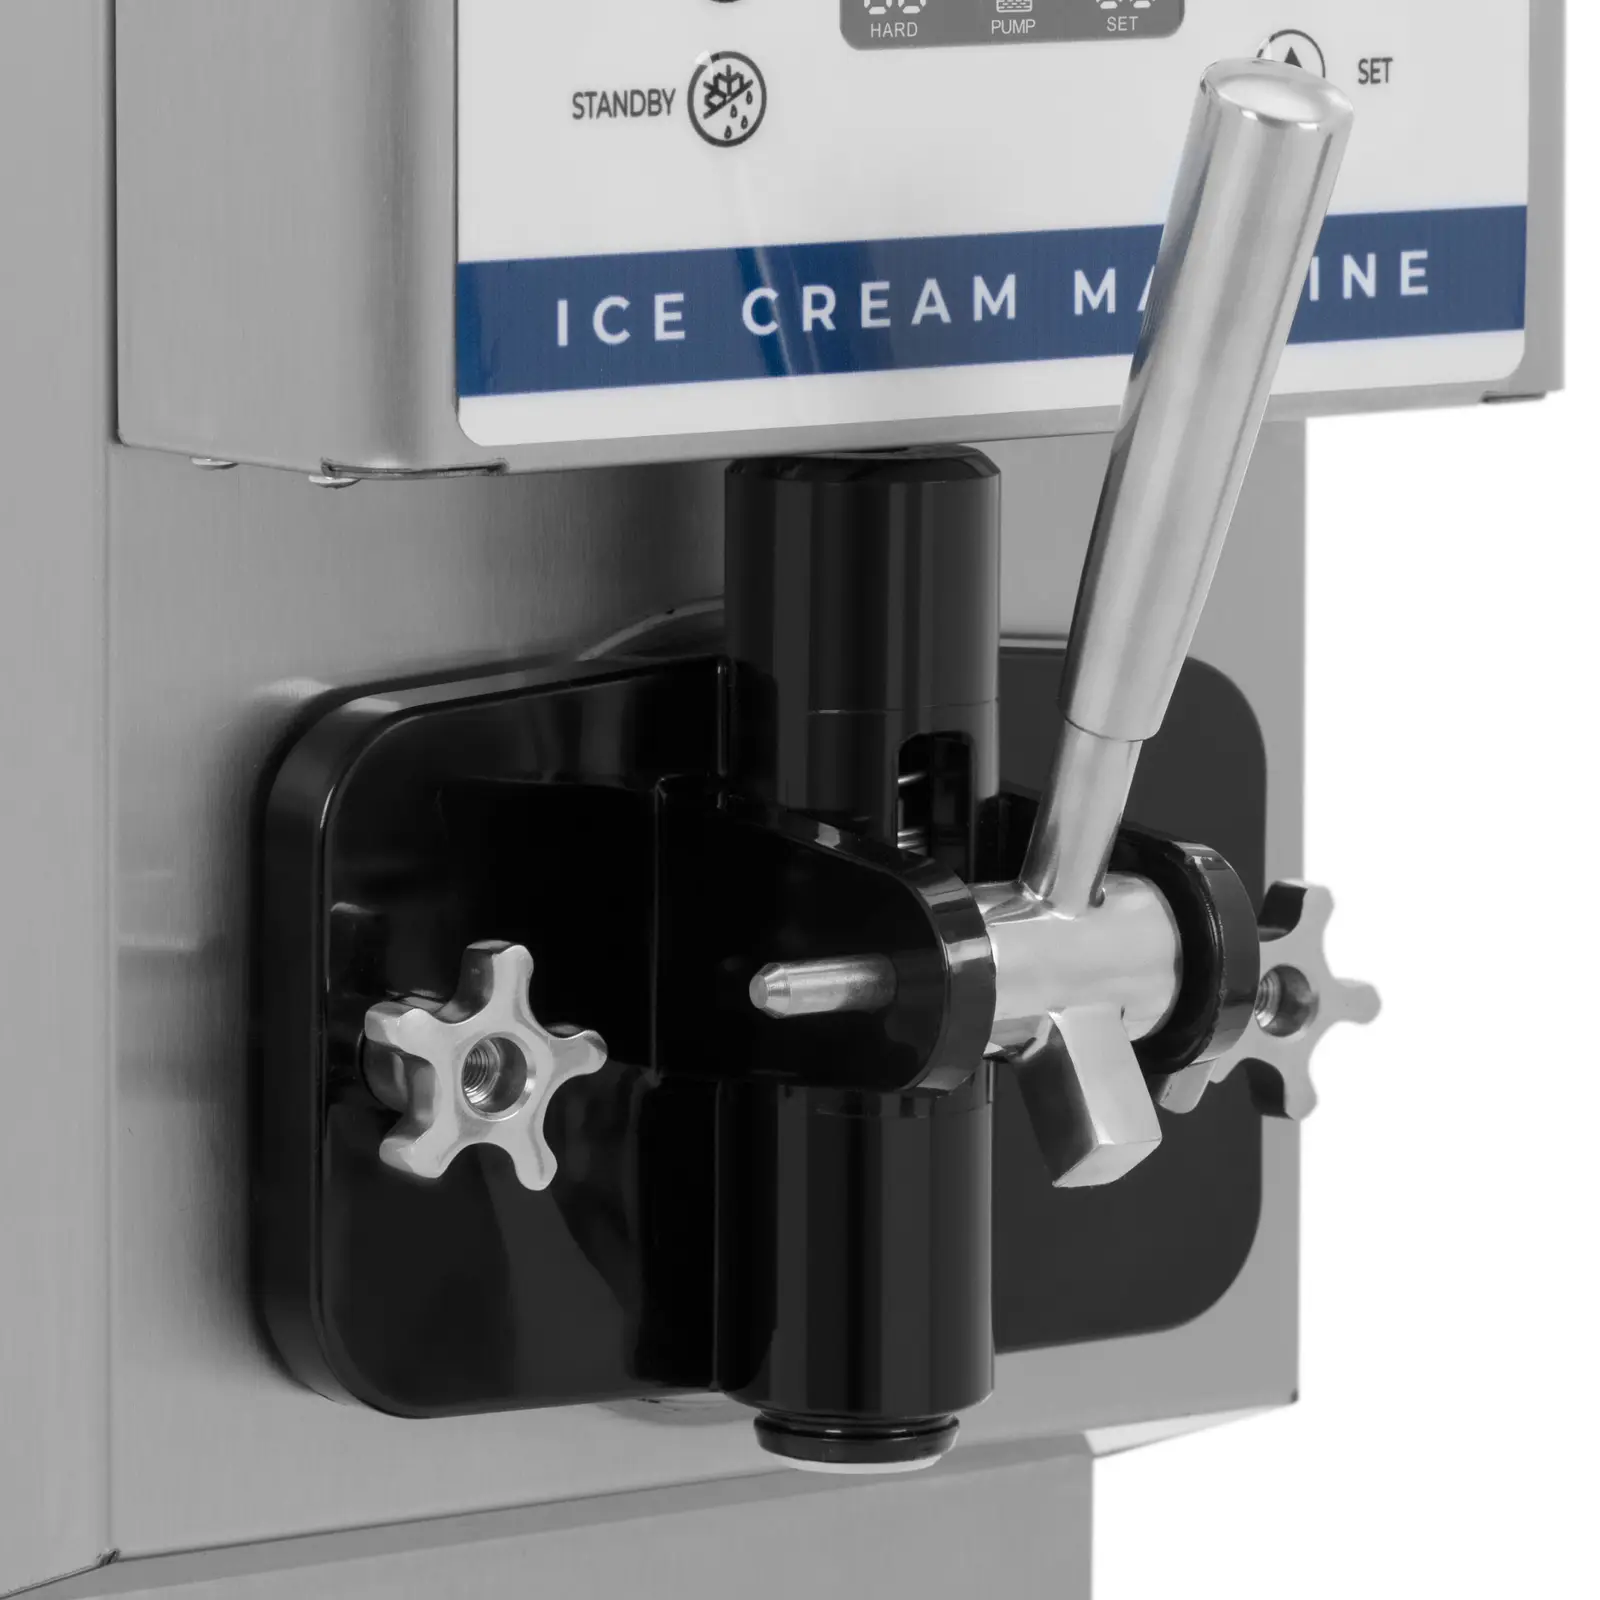 Soft Serve Ice Cream Machine - 800 W - 13 l/h - LED - Royal Catering